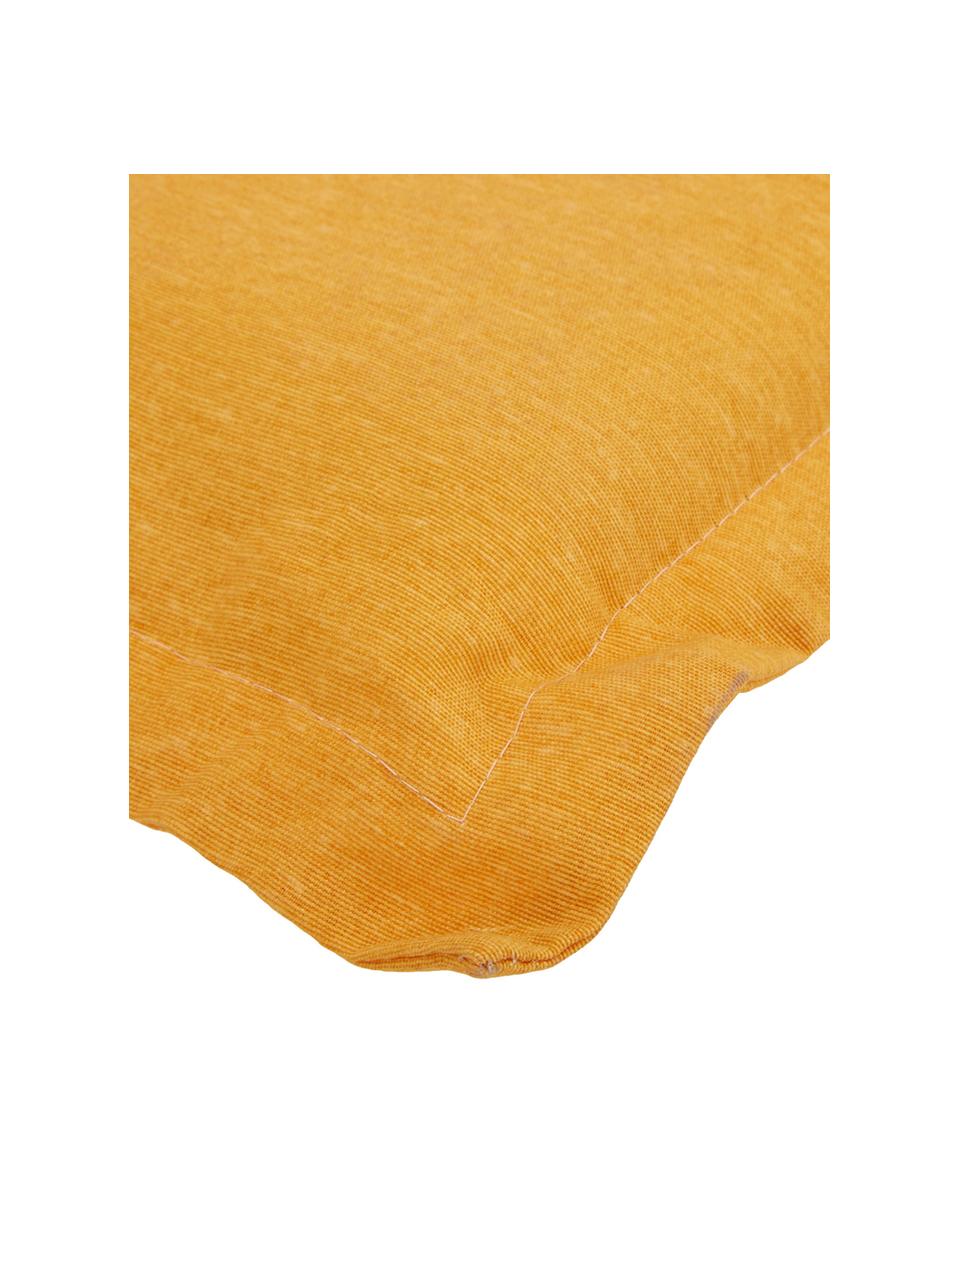 Einfarbige Hochlehner-Stuhlauflage Panama in Gelb, Bezug: 50% Baumwolle, 50% Polyes, Gelb, B 42 x L 120 cm